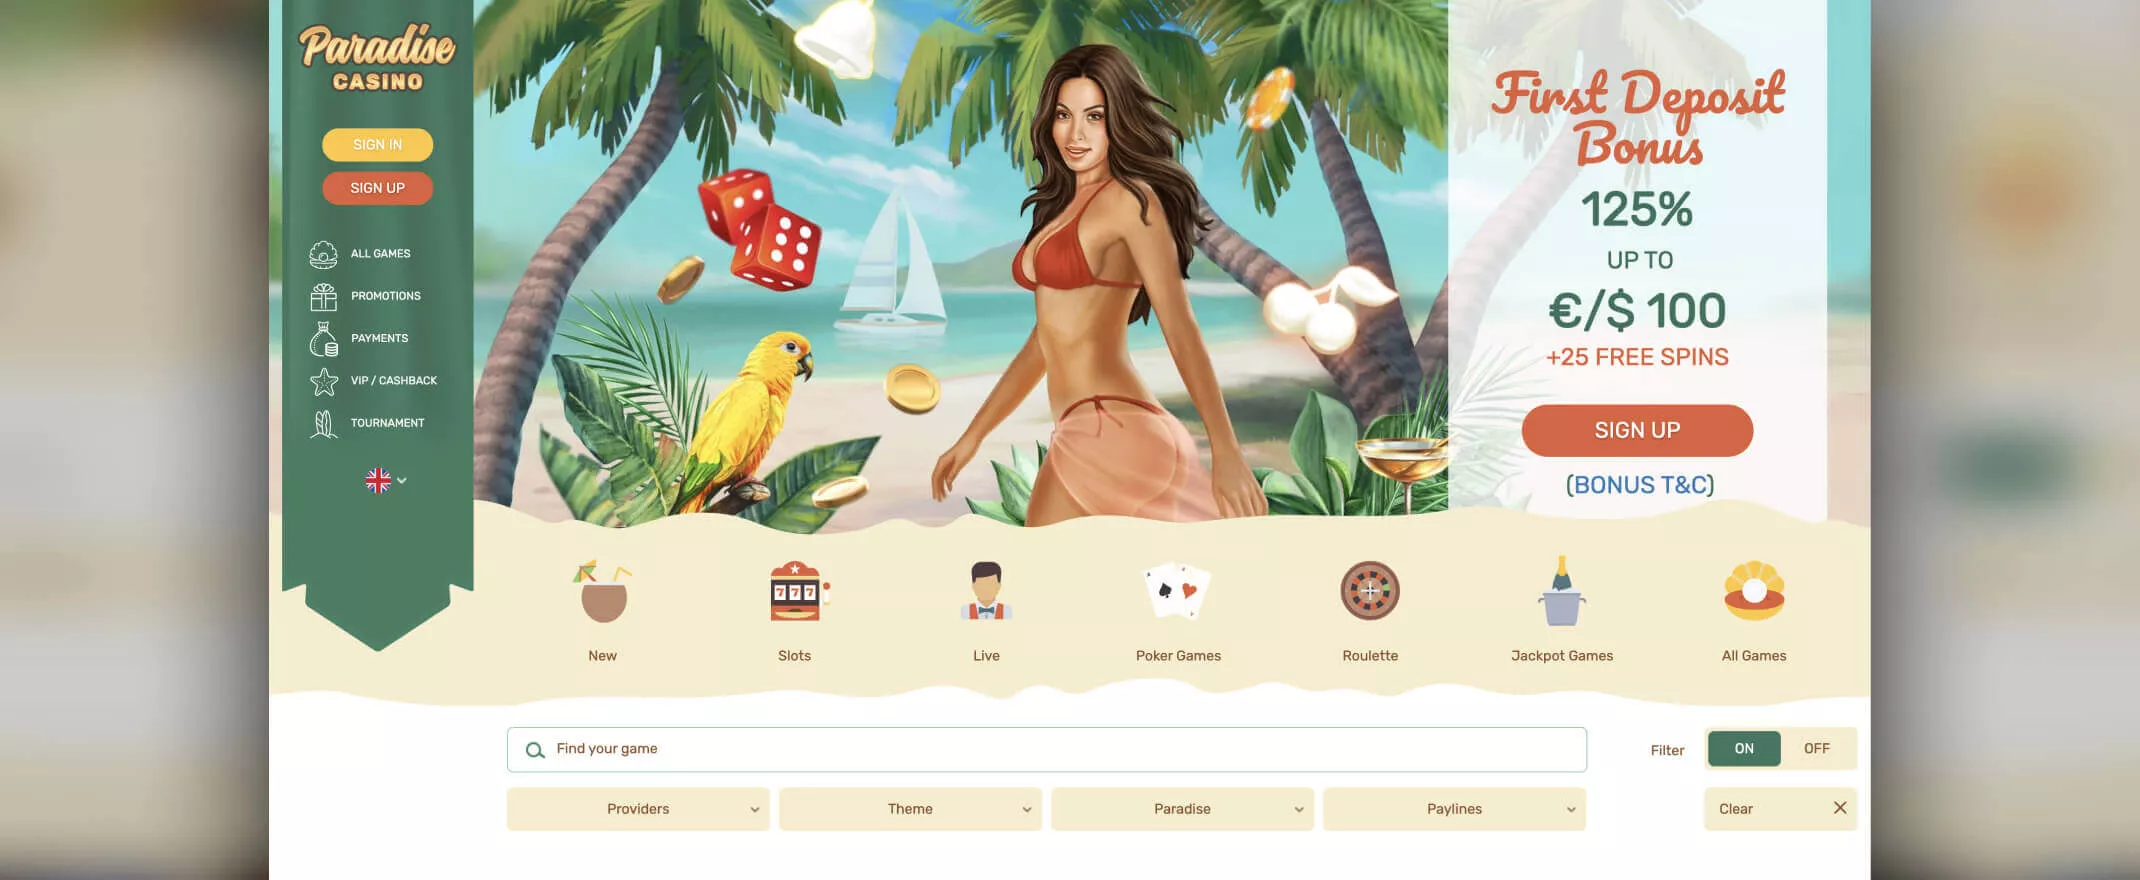 Paradise screenshot of the homepage